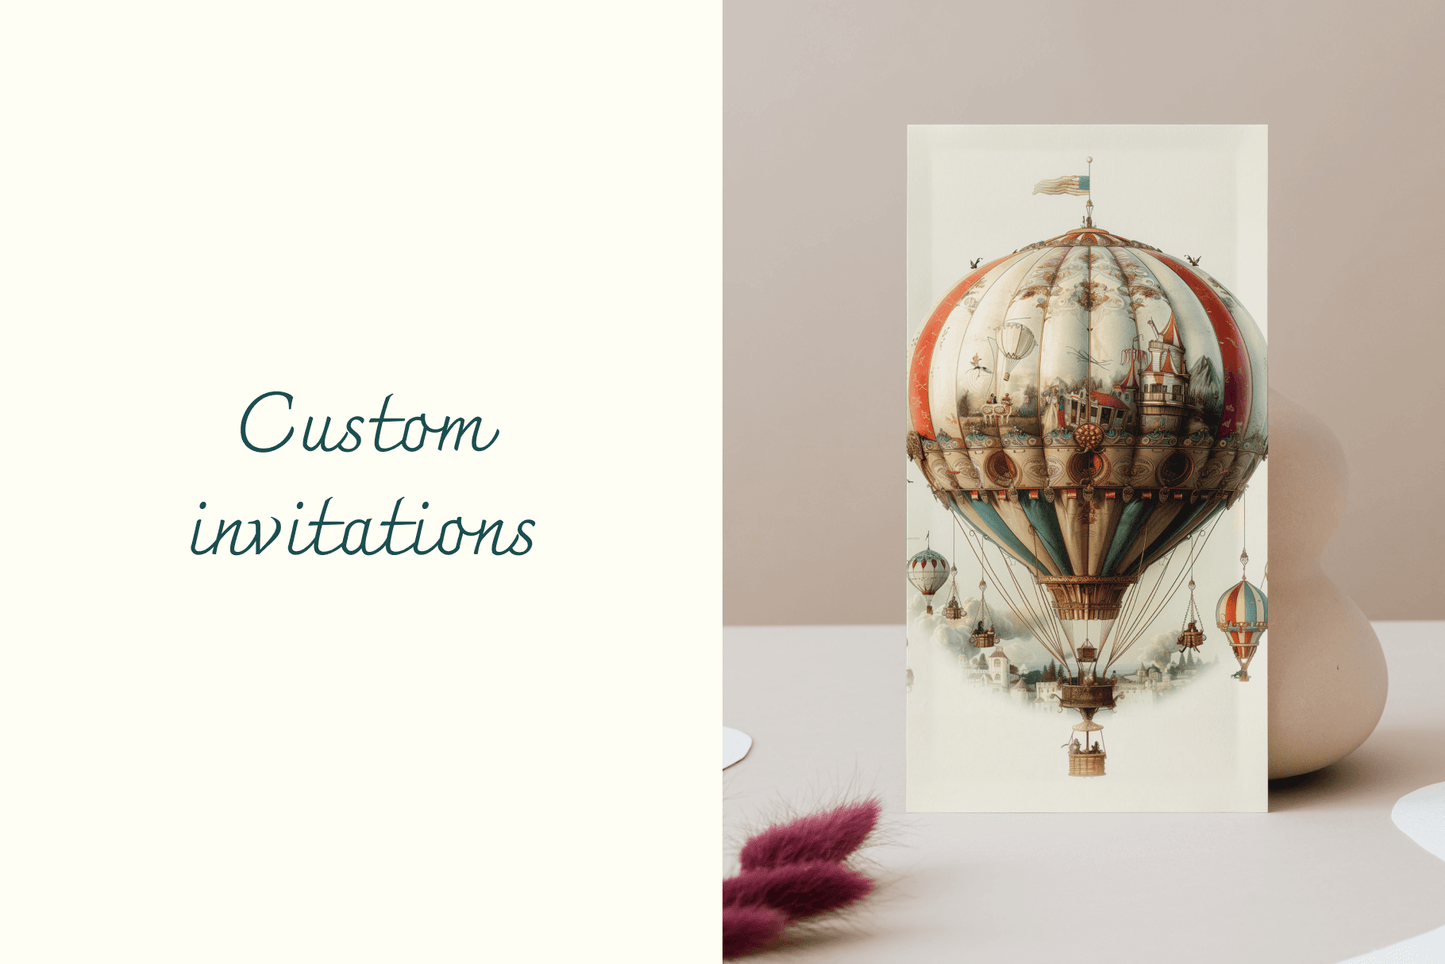 Custom wedding invitation with a vintage hot air balloon and circus theme